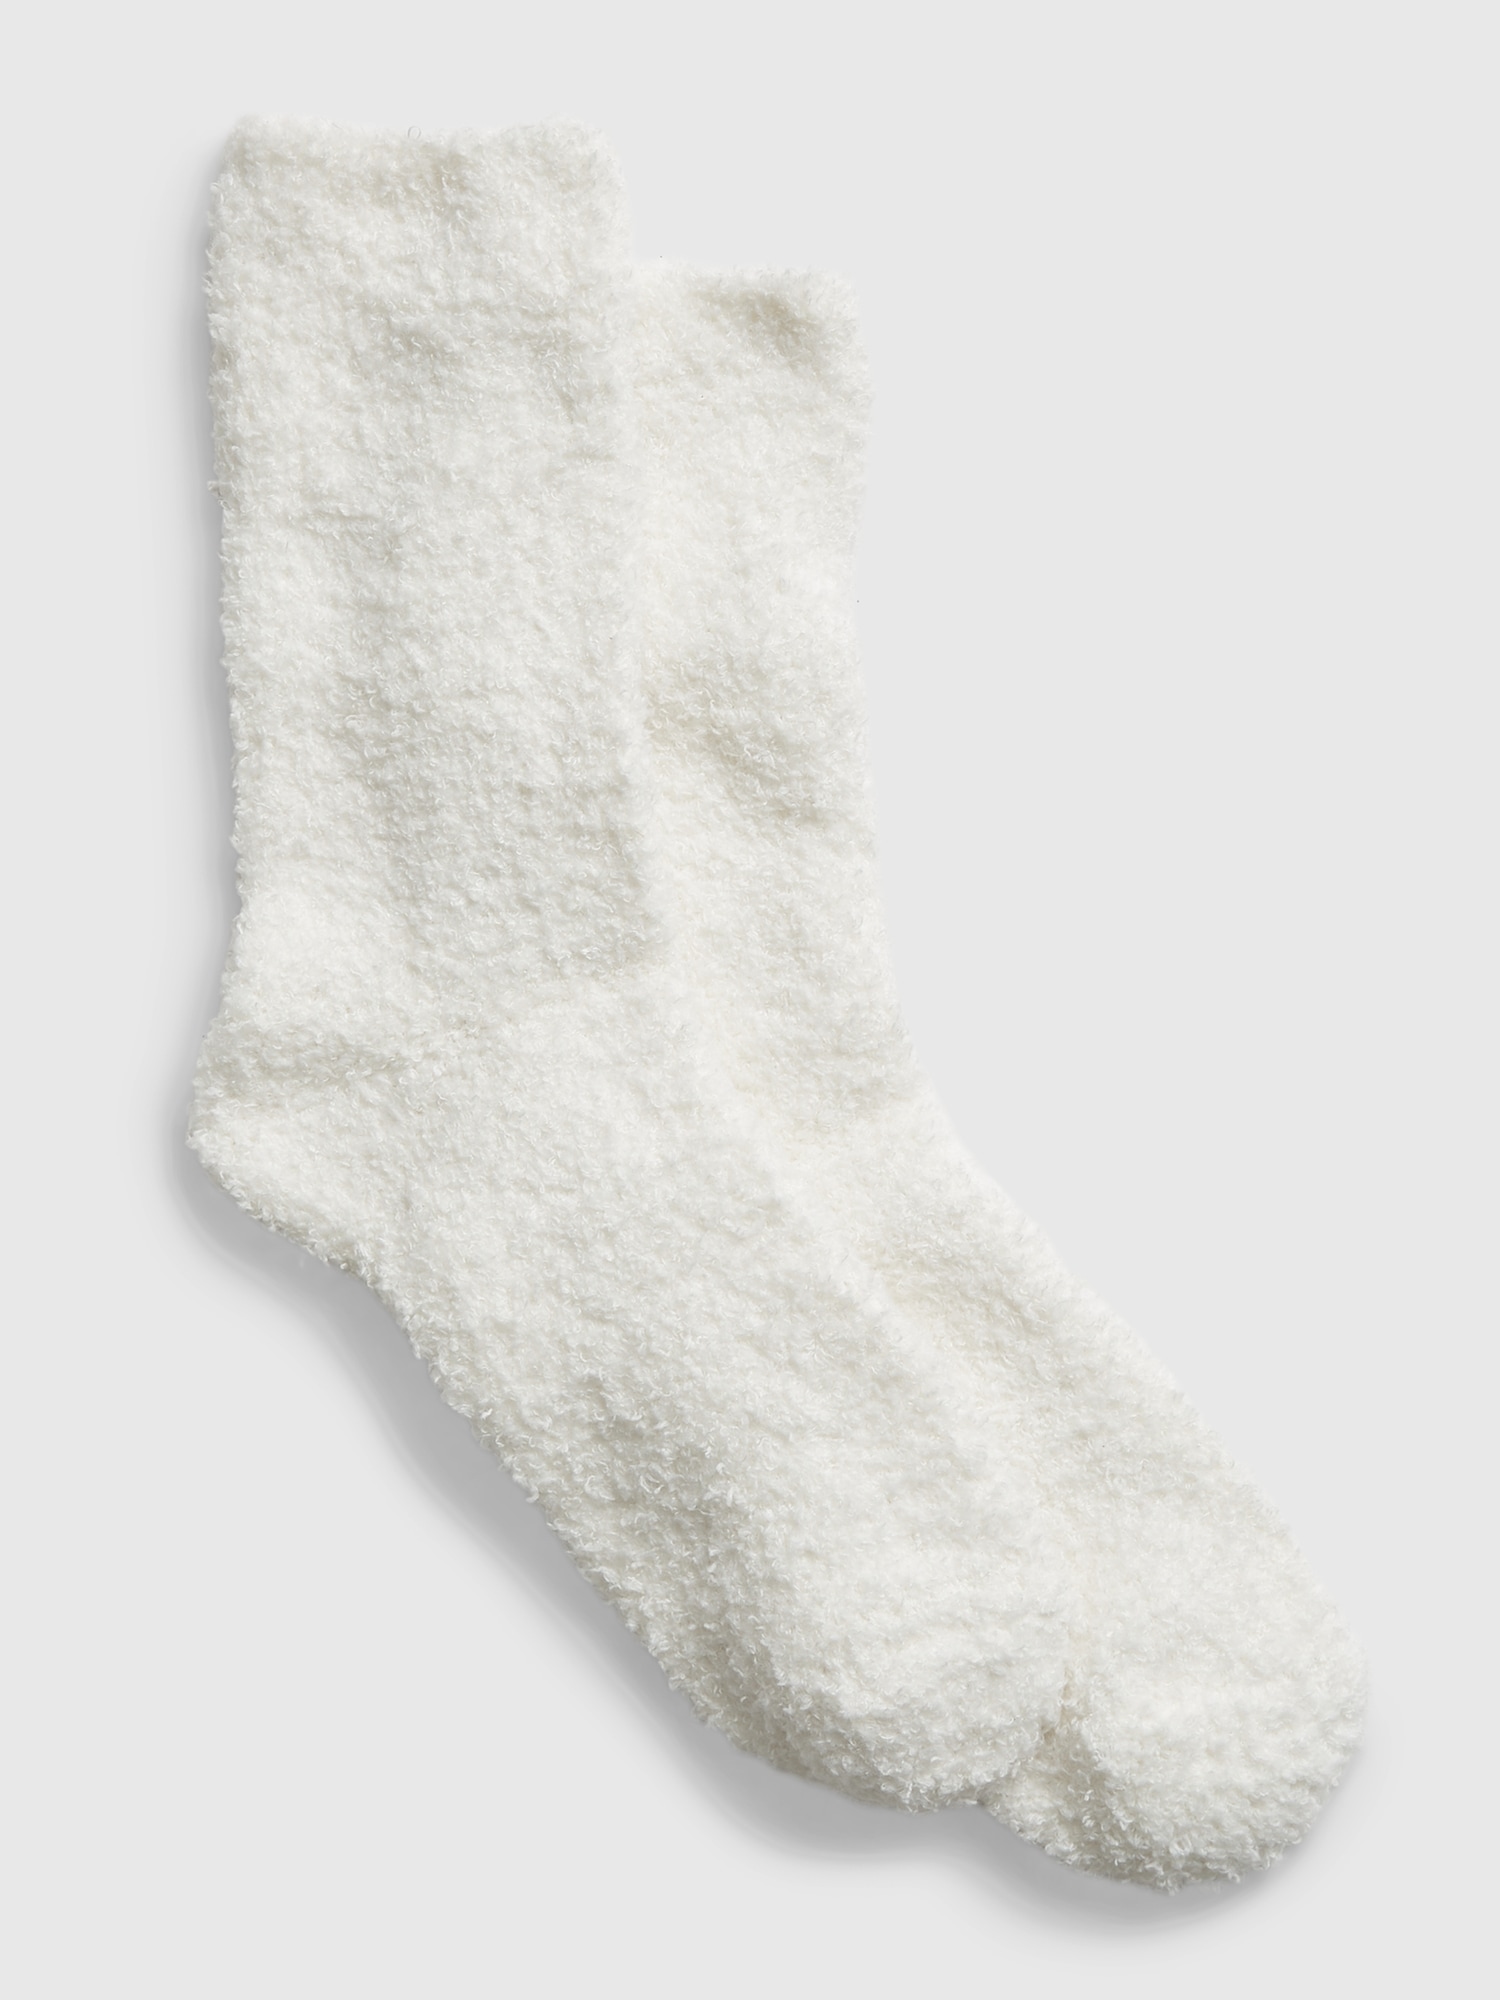 Cozy Socks | Gap